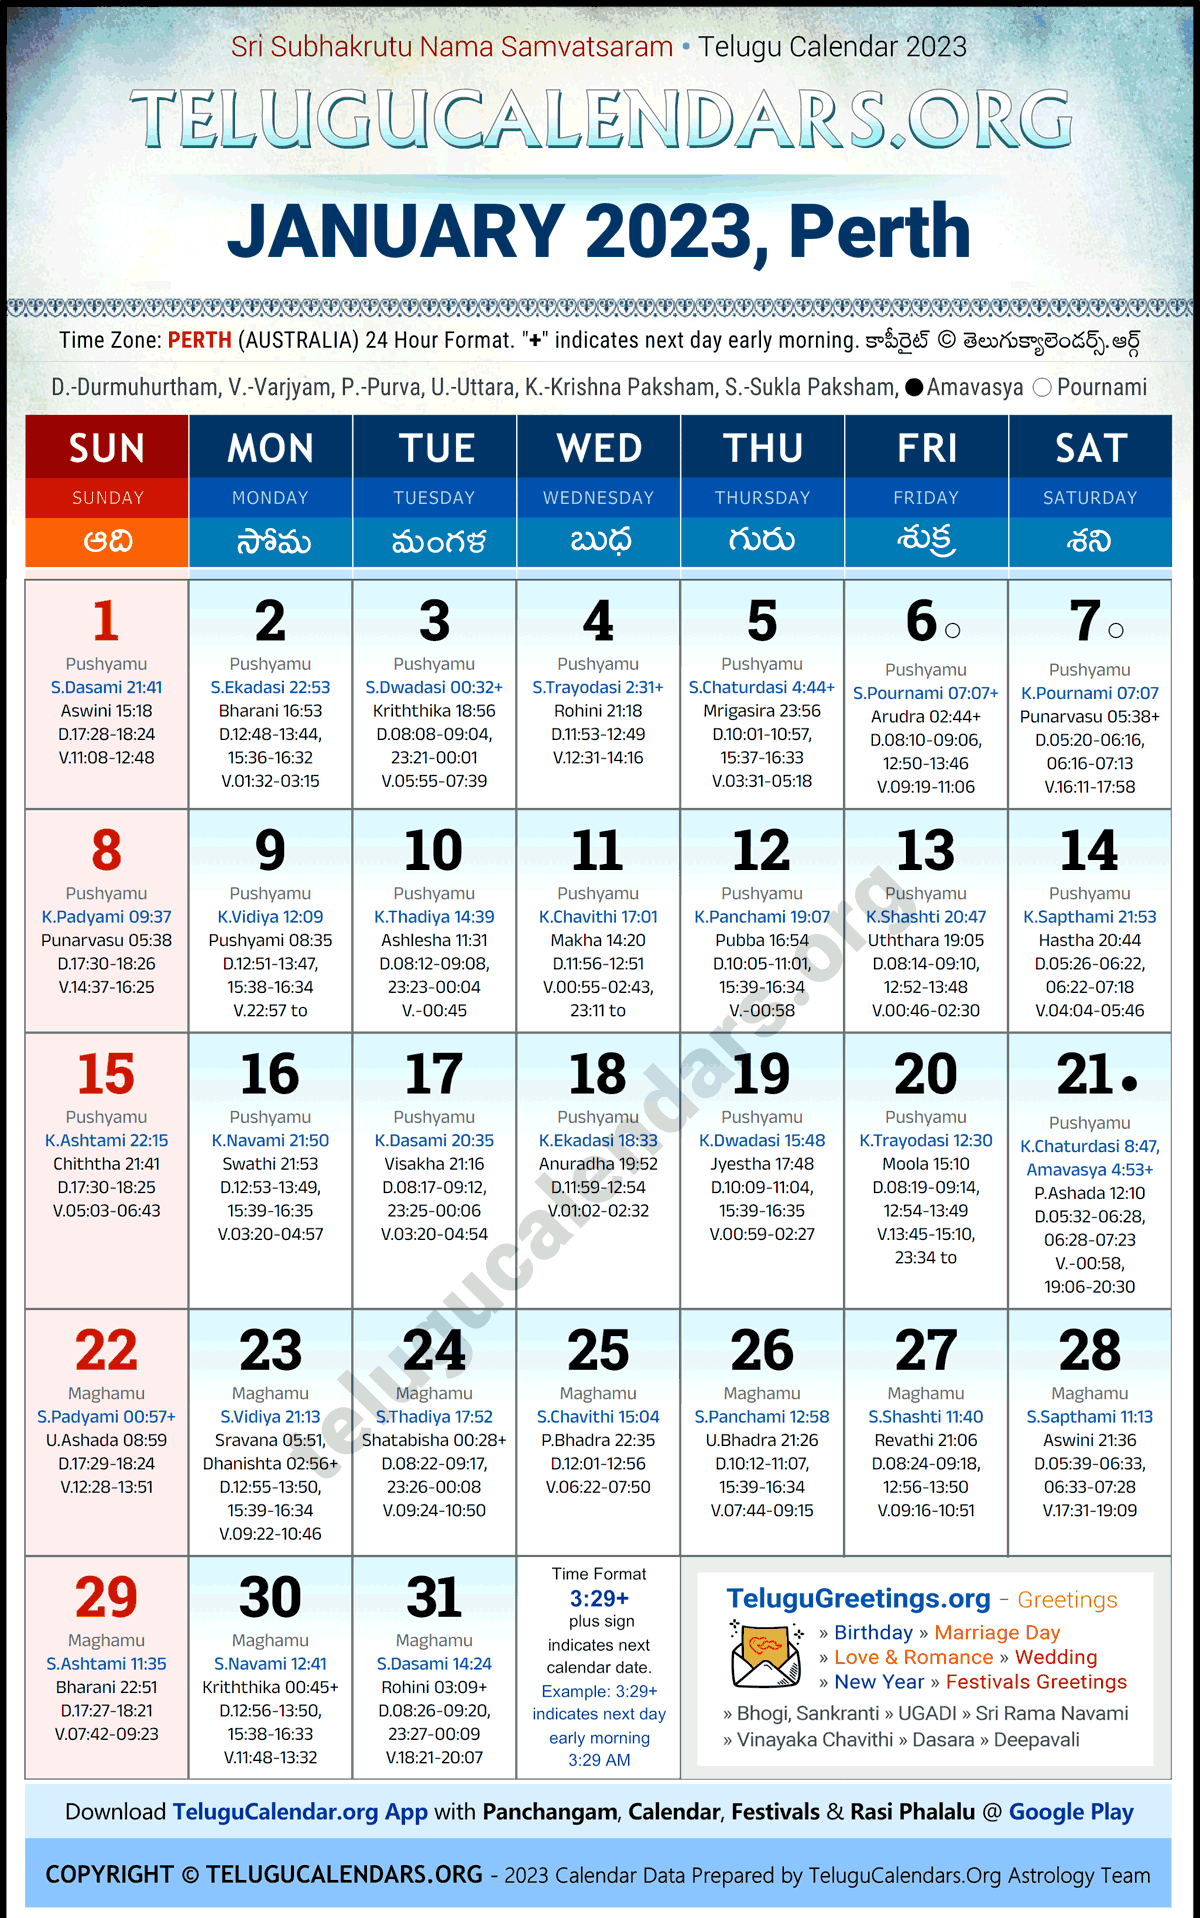 Telugu Calendar 2023 January Festivals for Perth